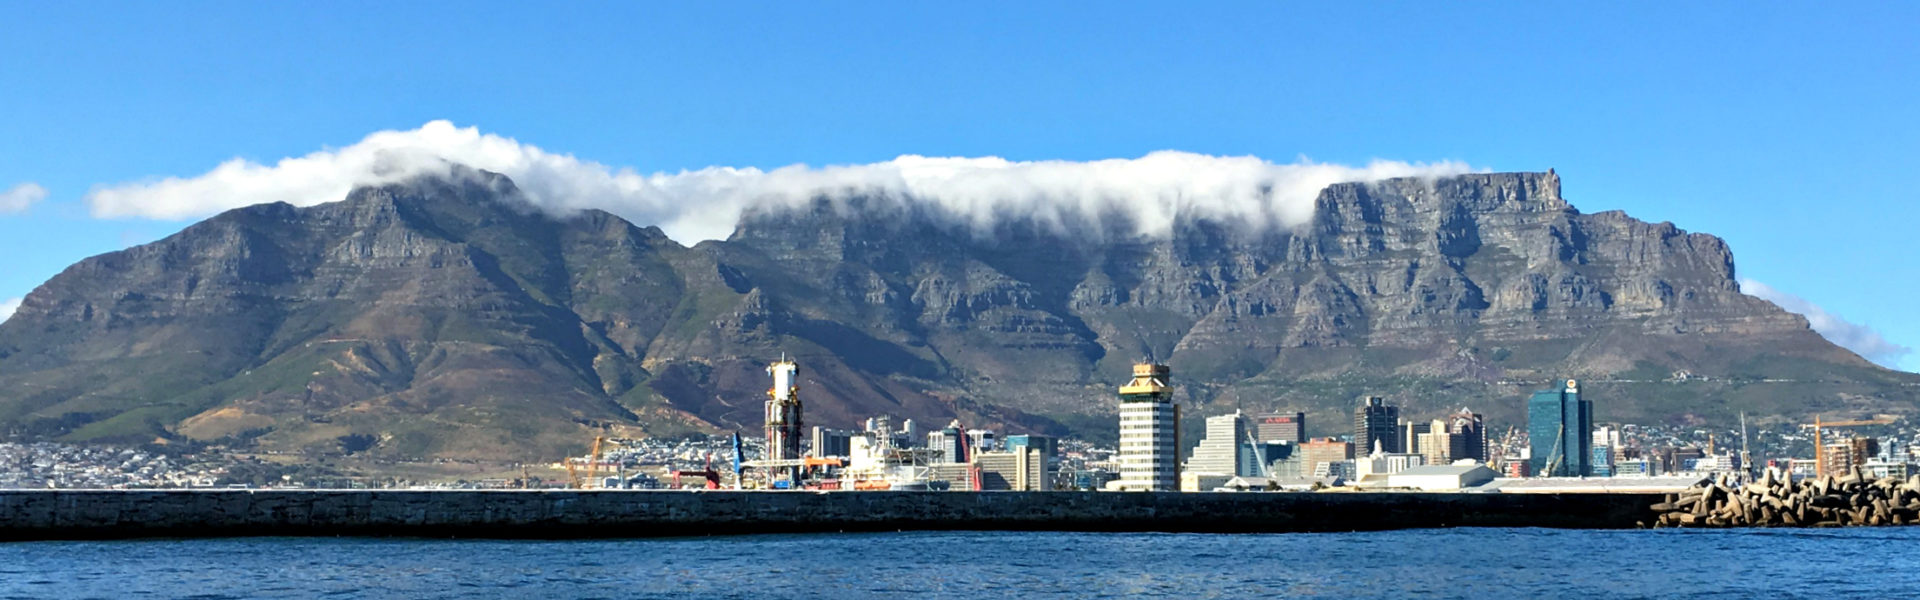 Our Top Ten Destinations Bucket List #1: South Africa